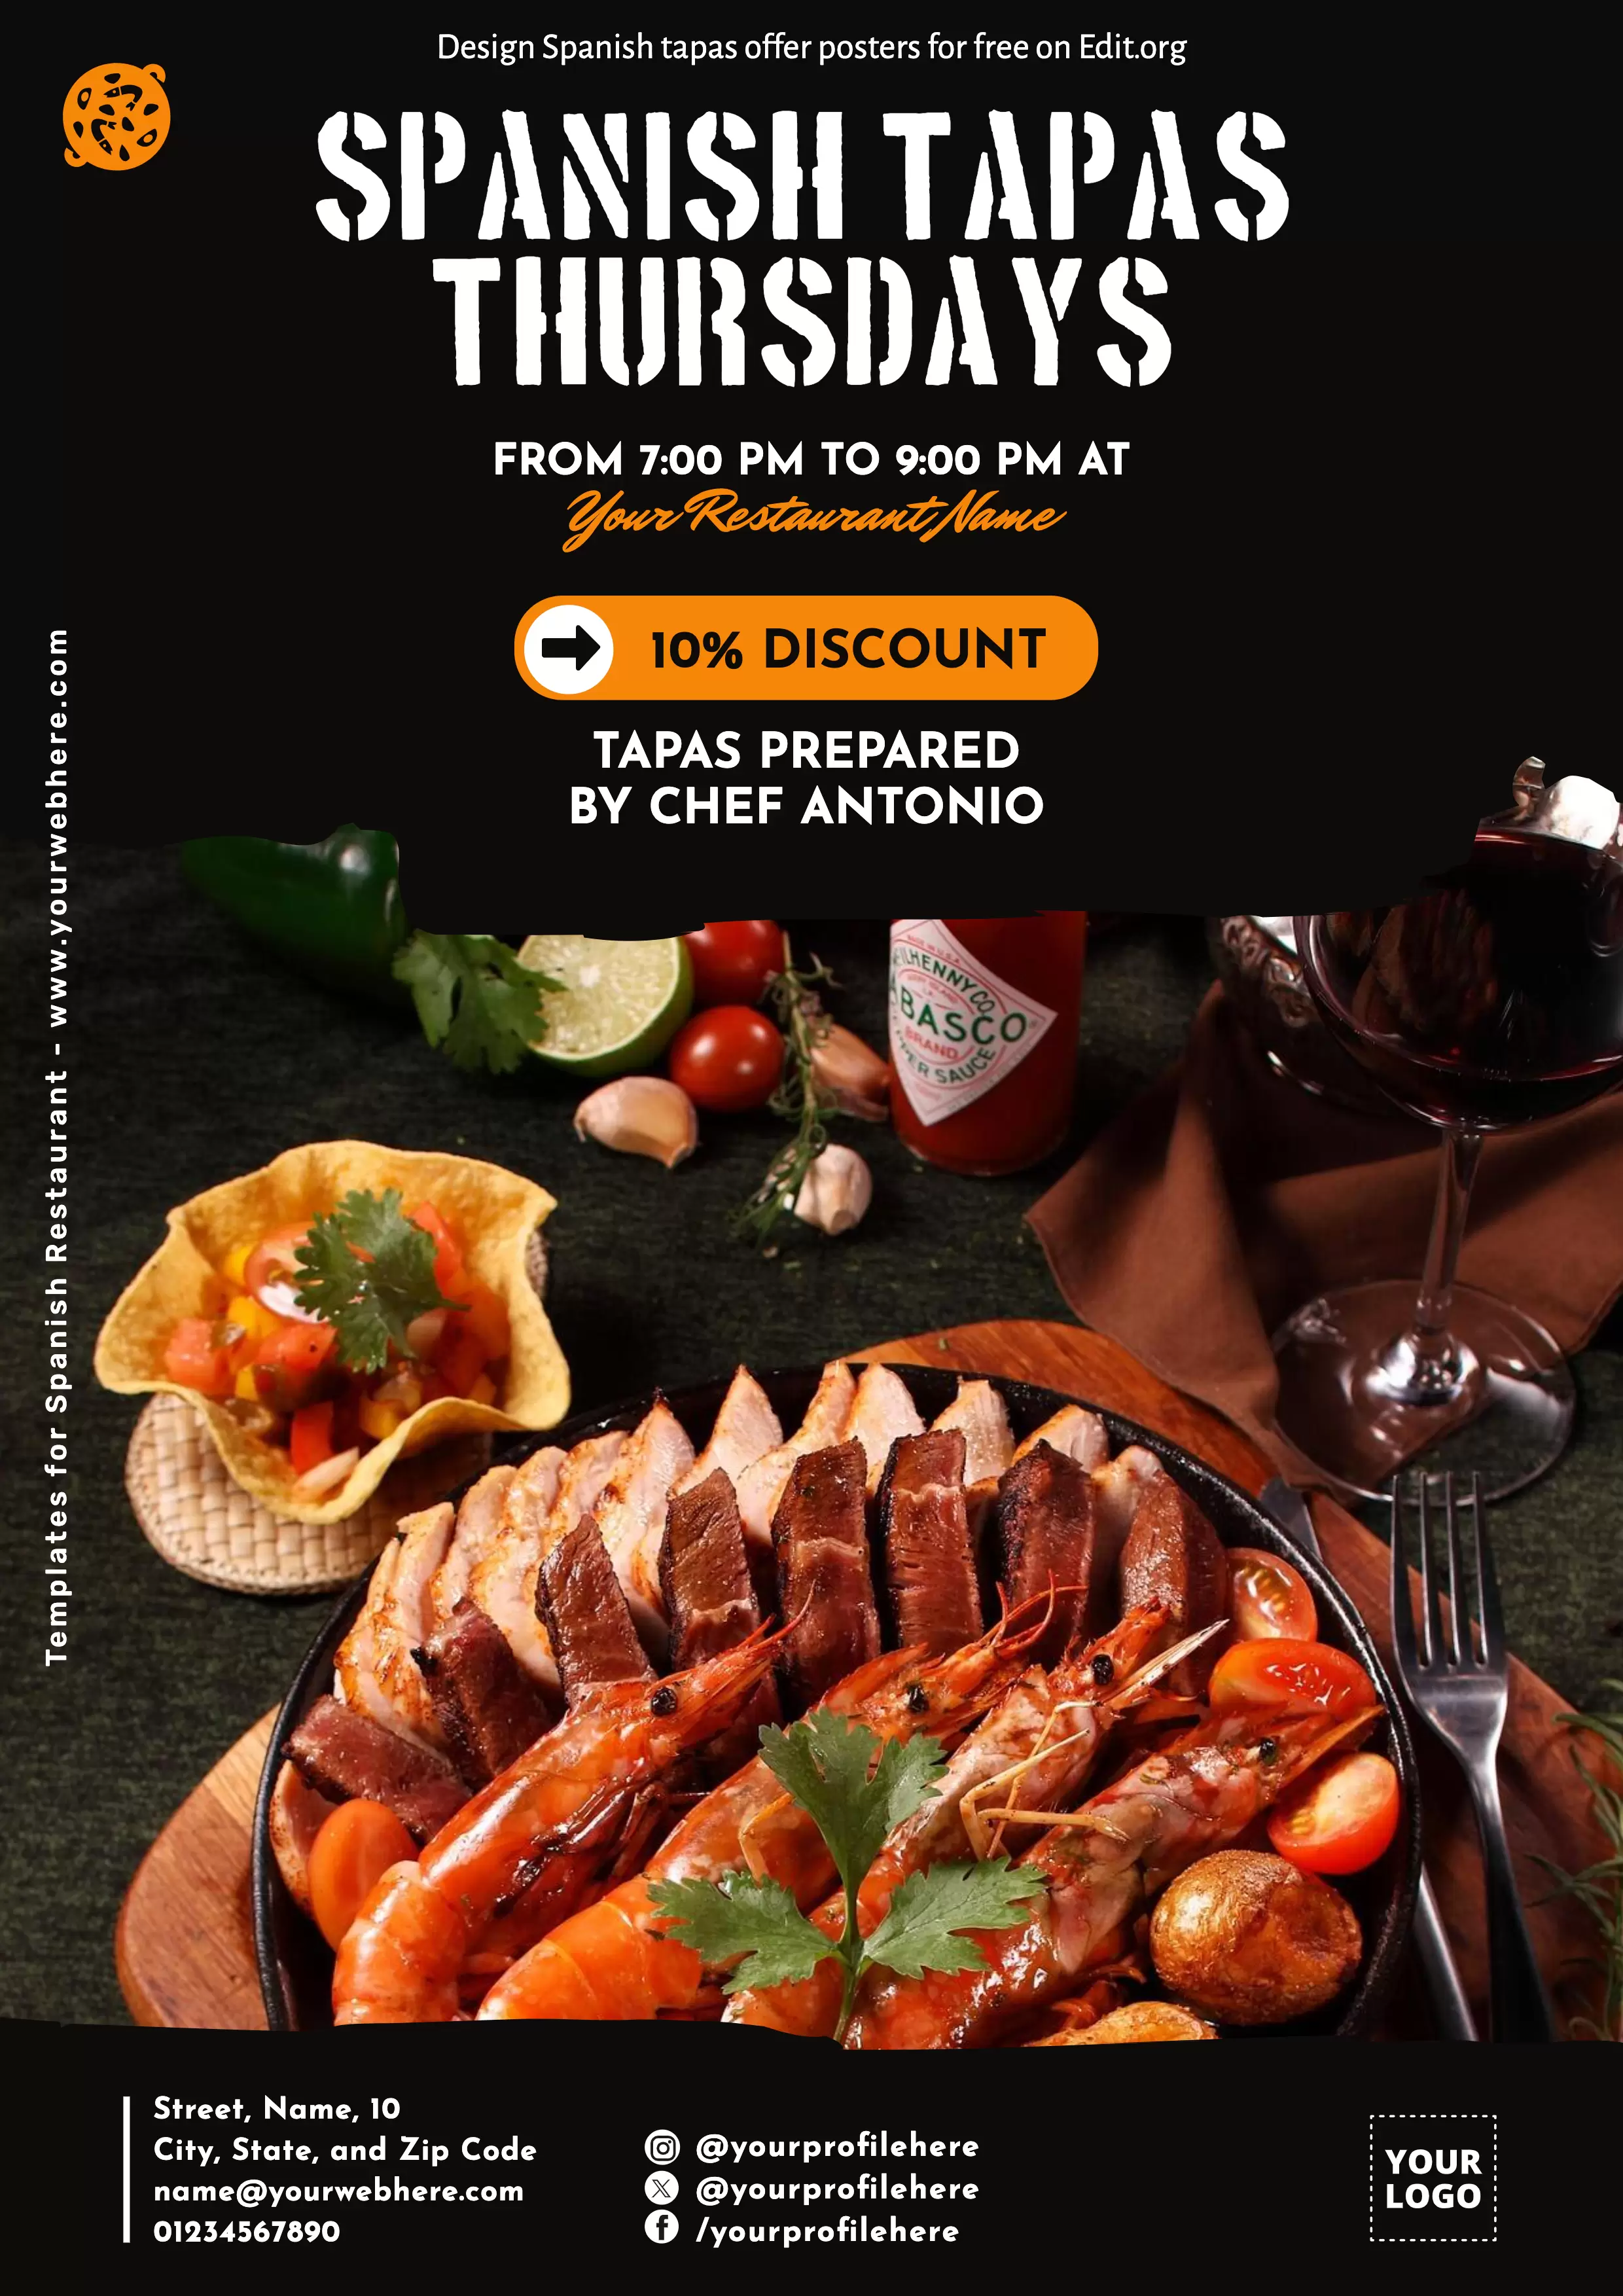 Printable Spanish Restaurant tapas poster to download